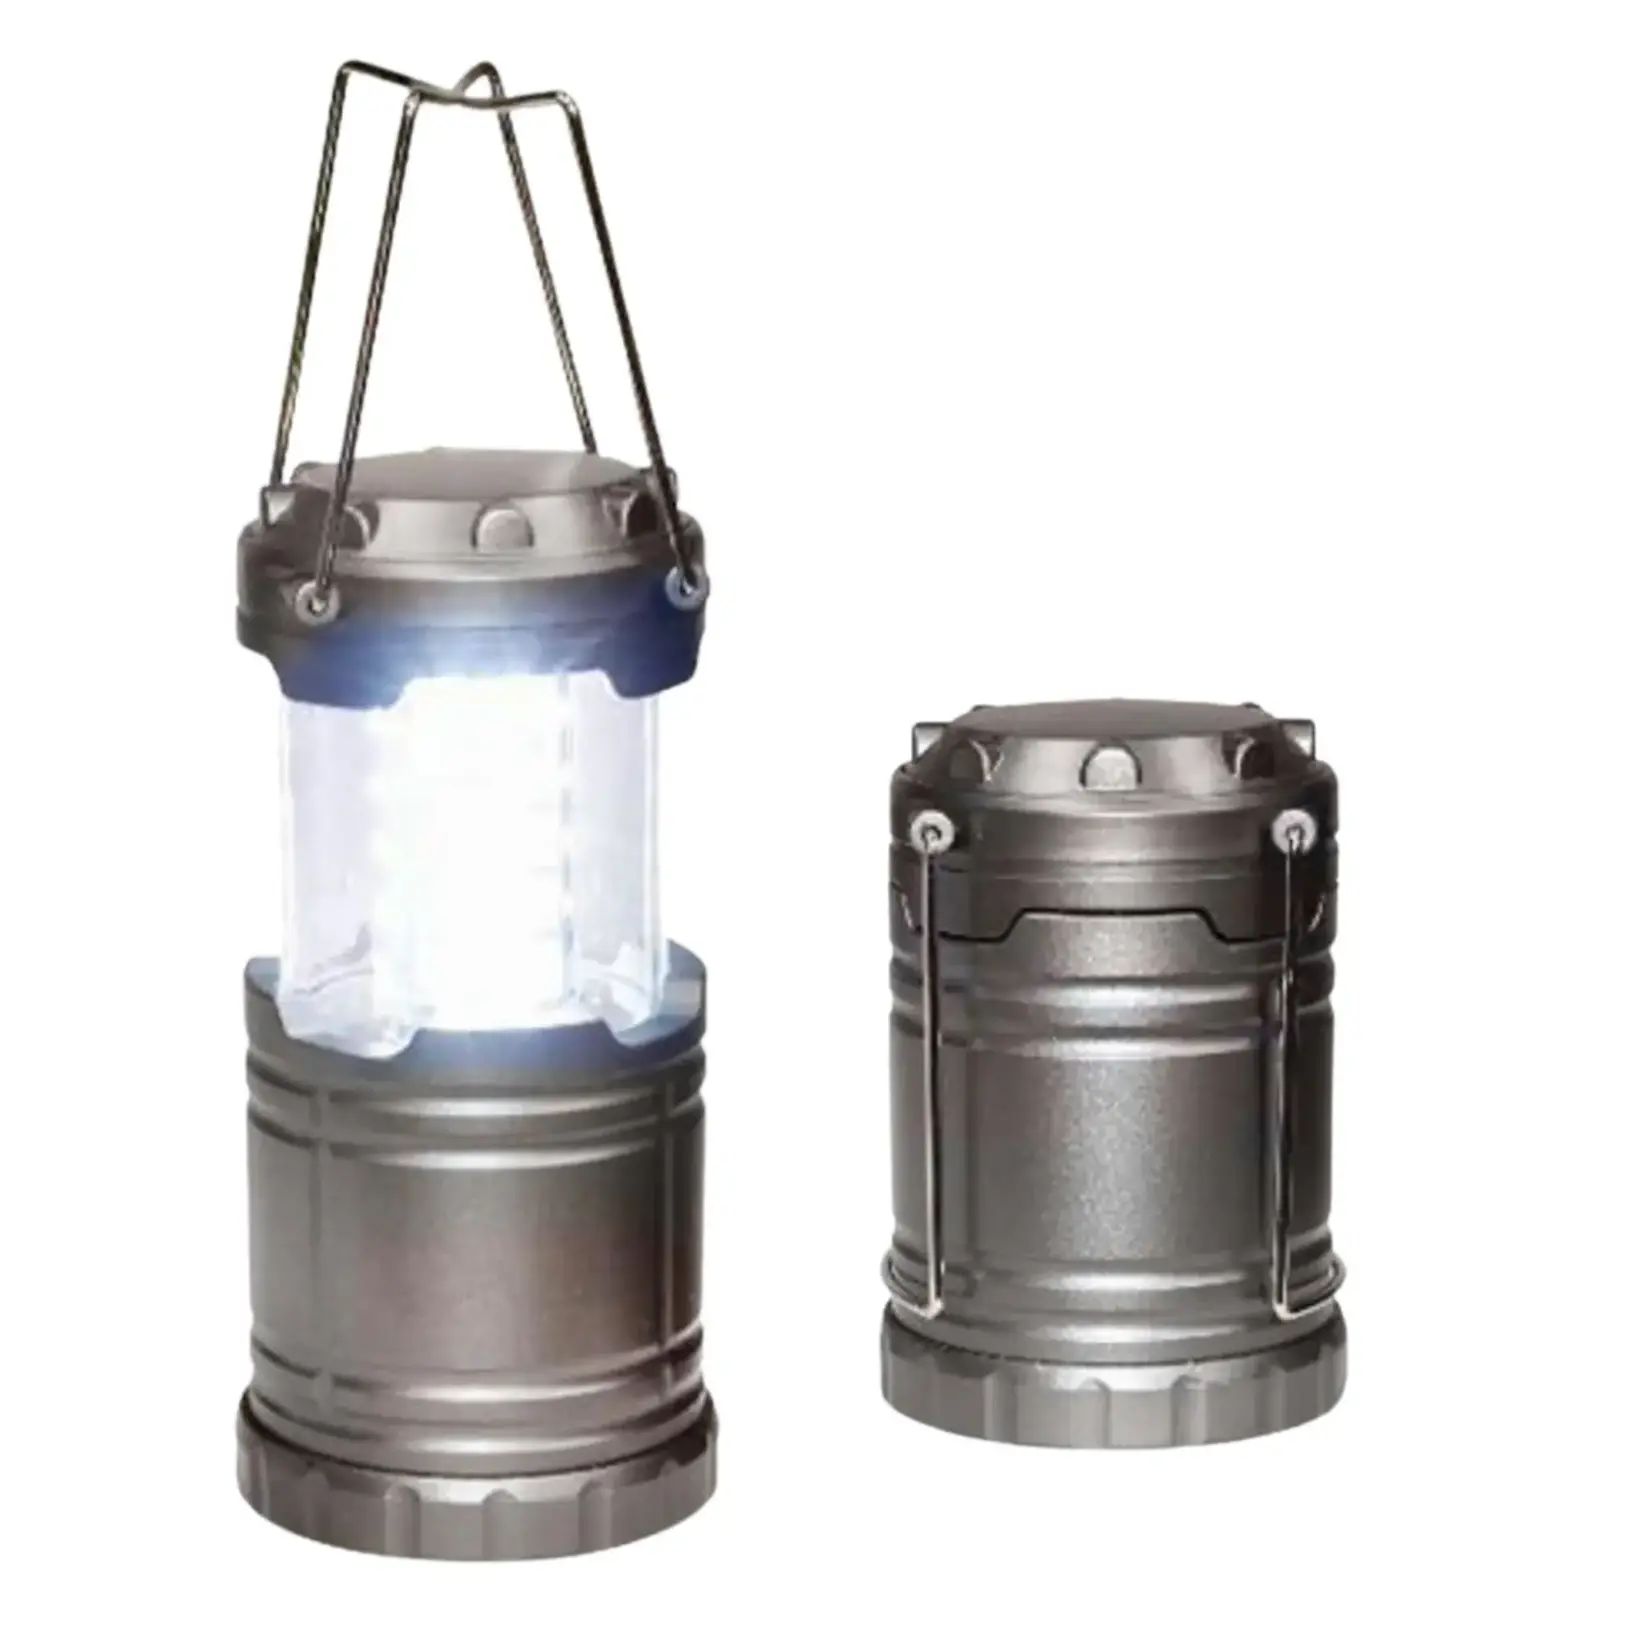 RWD Lanterne Rétractable Rwd Tak-Lite 200 Lumens